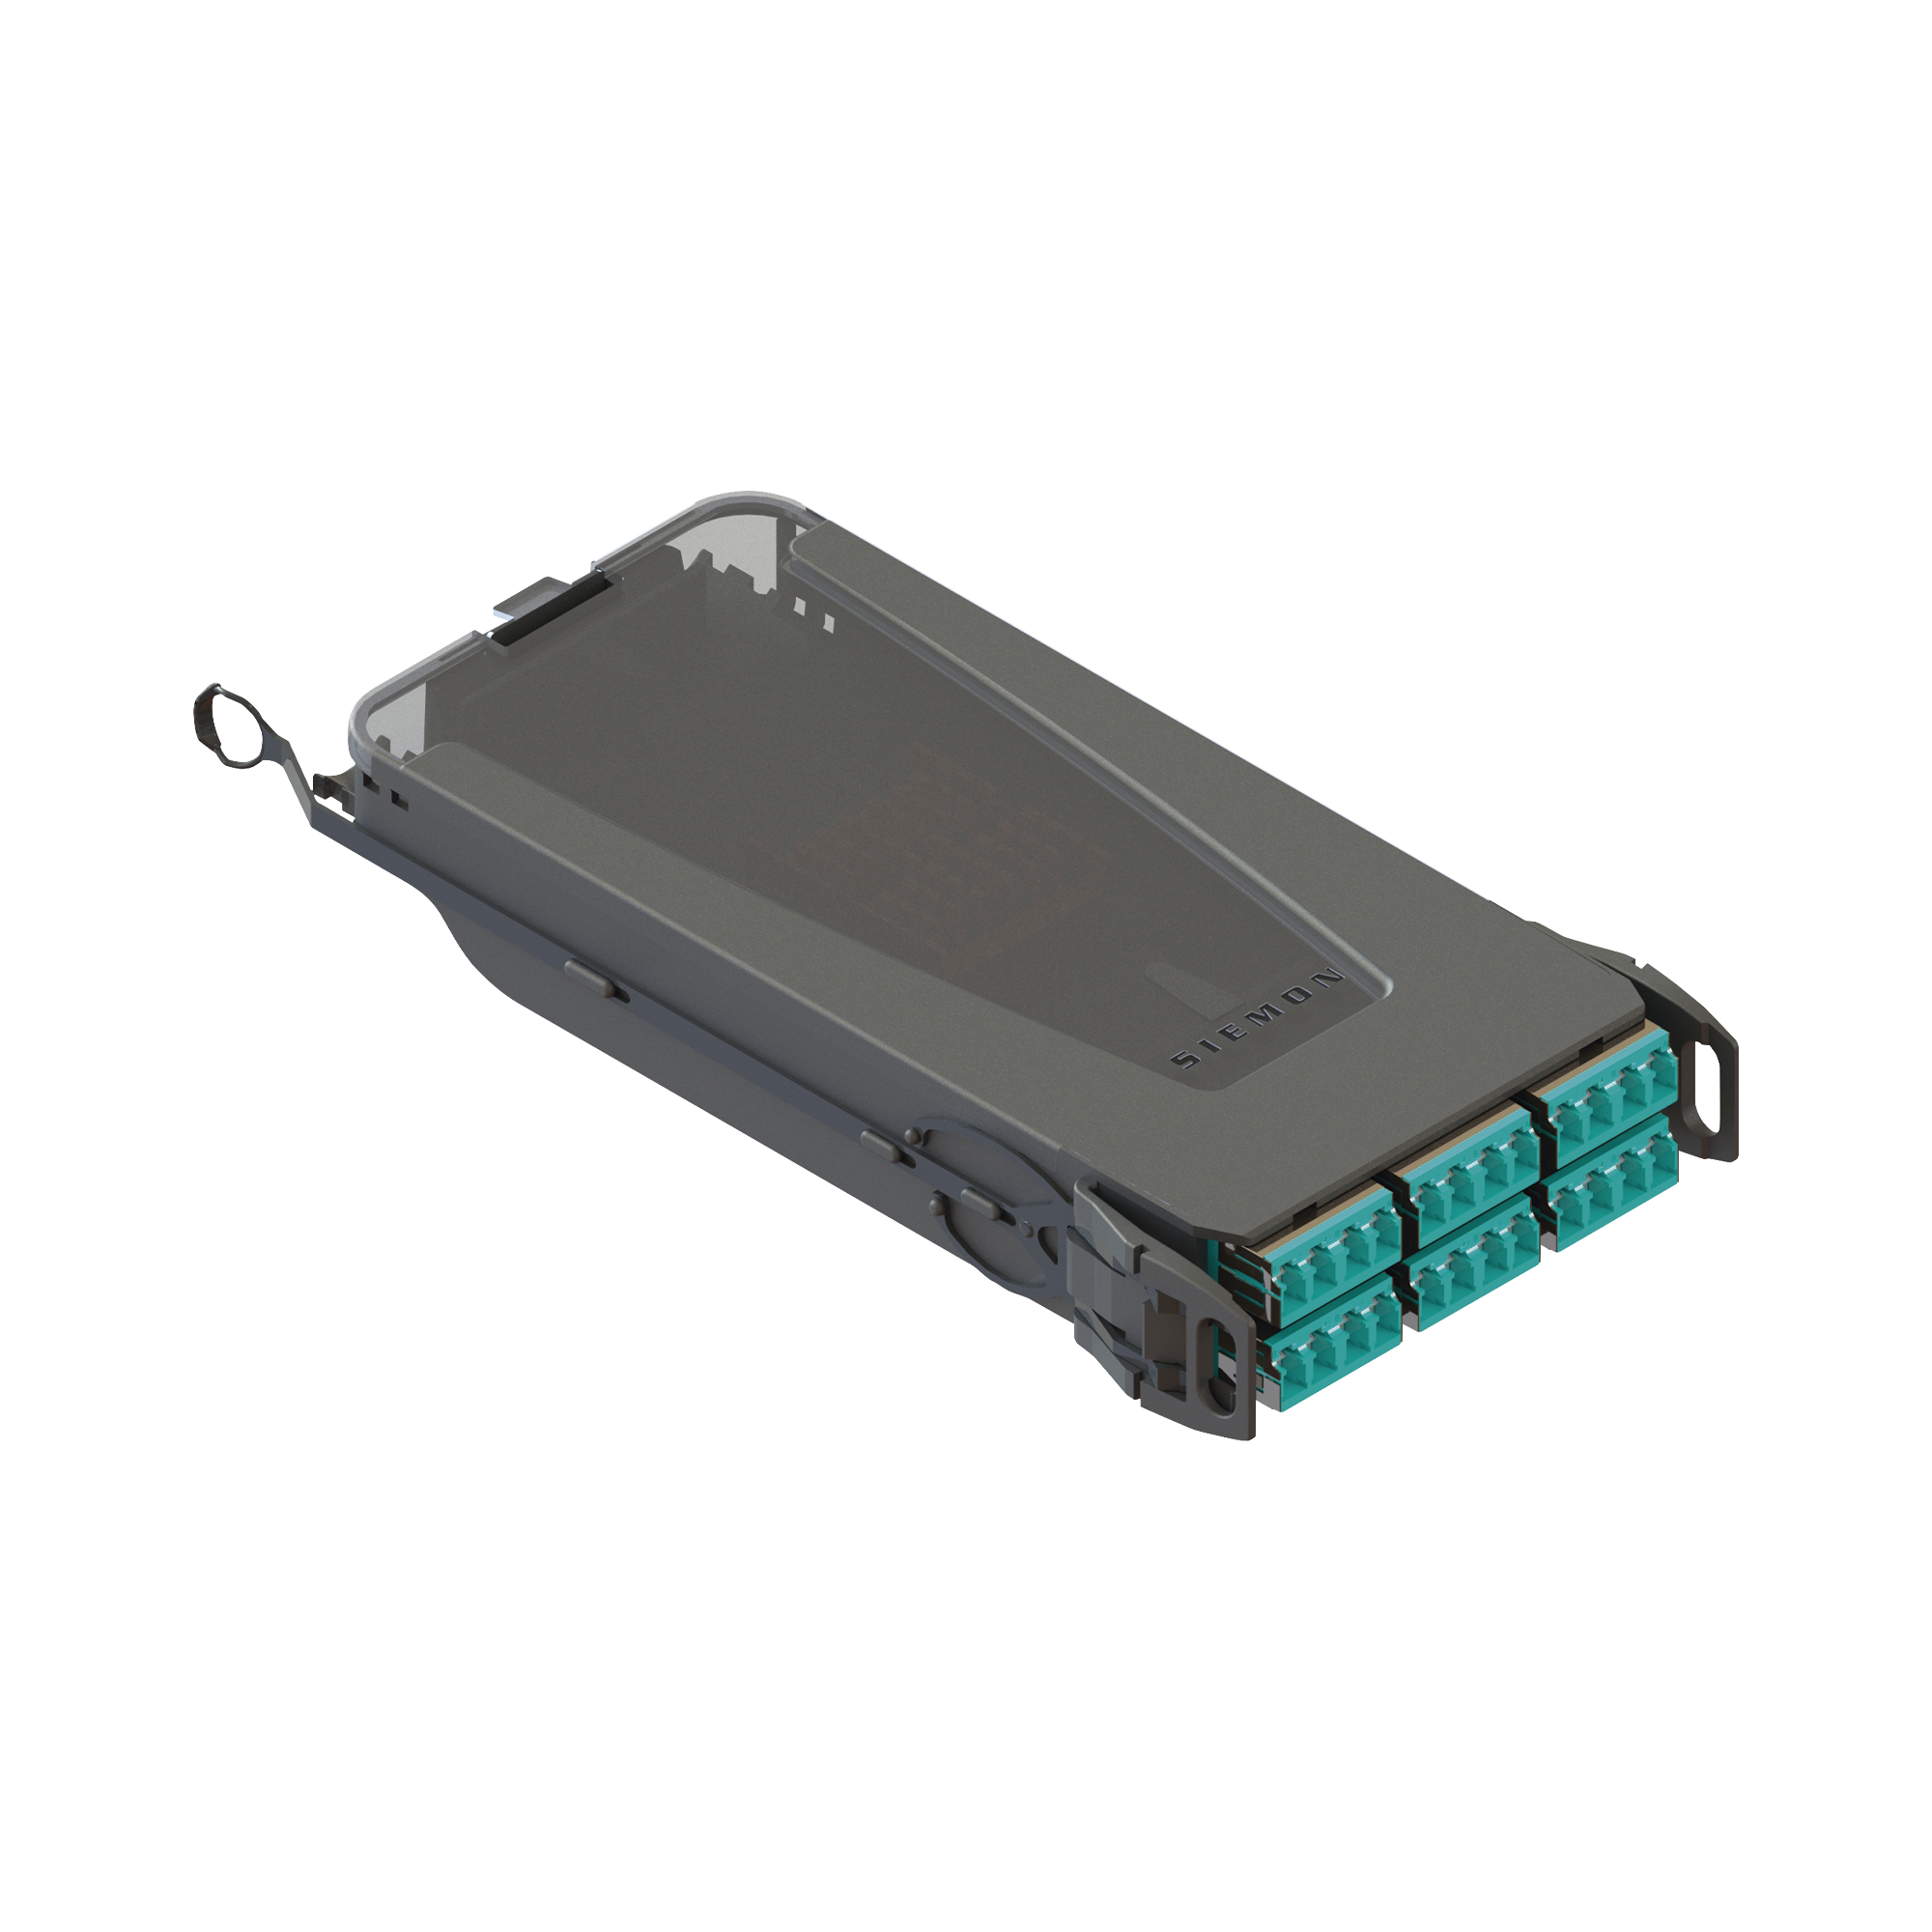 Cassette de empalme LightVerse, Acepta 24 fibras con conectores LC “Shuttered” Para fibra Multimodo Aqua OM3, incluye tapas cubre polvo abatibles integradas por cada conector.